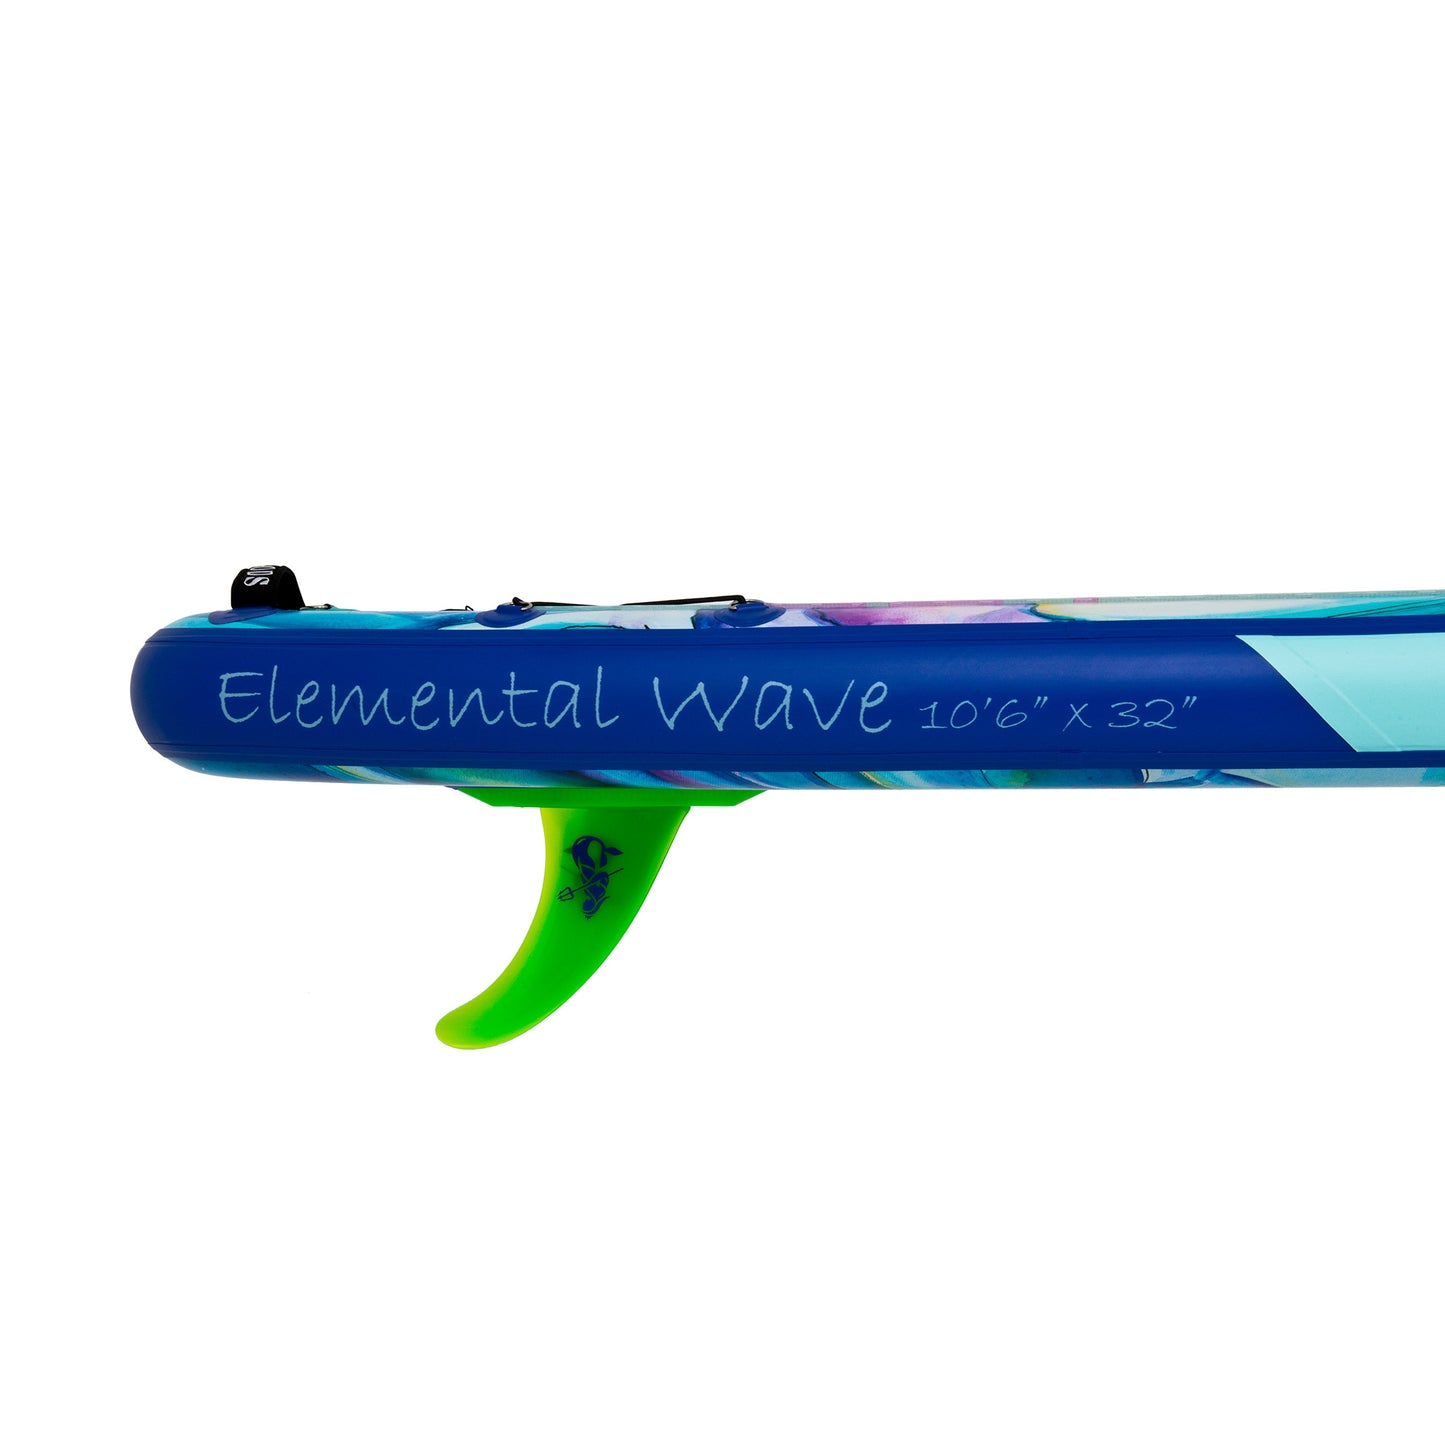 Elemental Wave Fin View